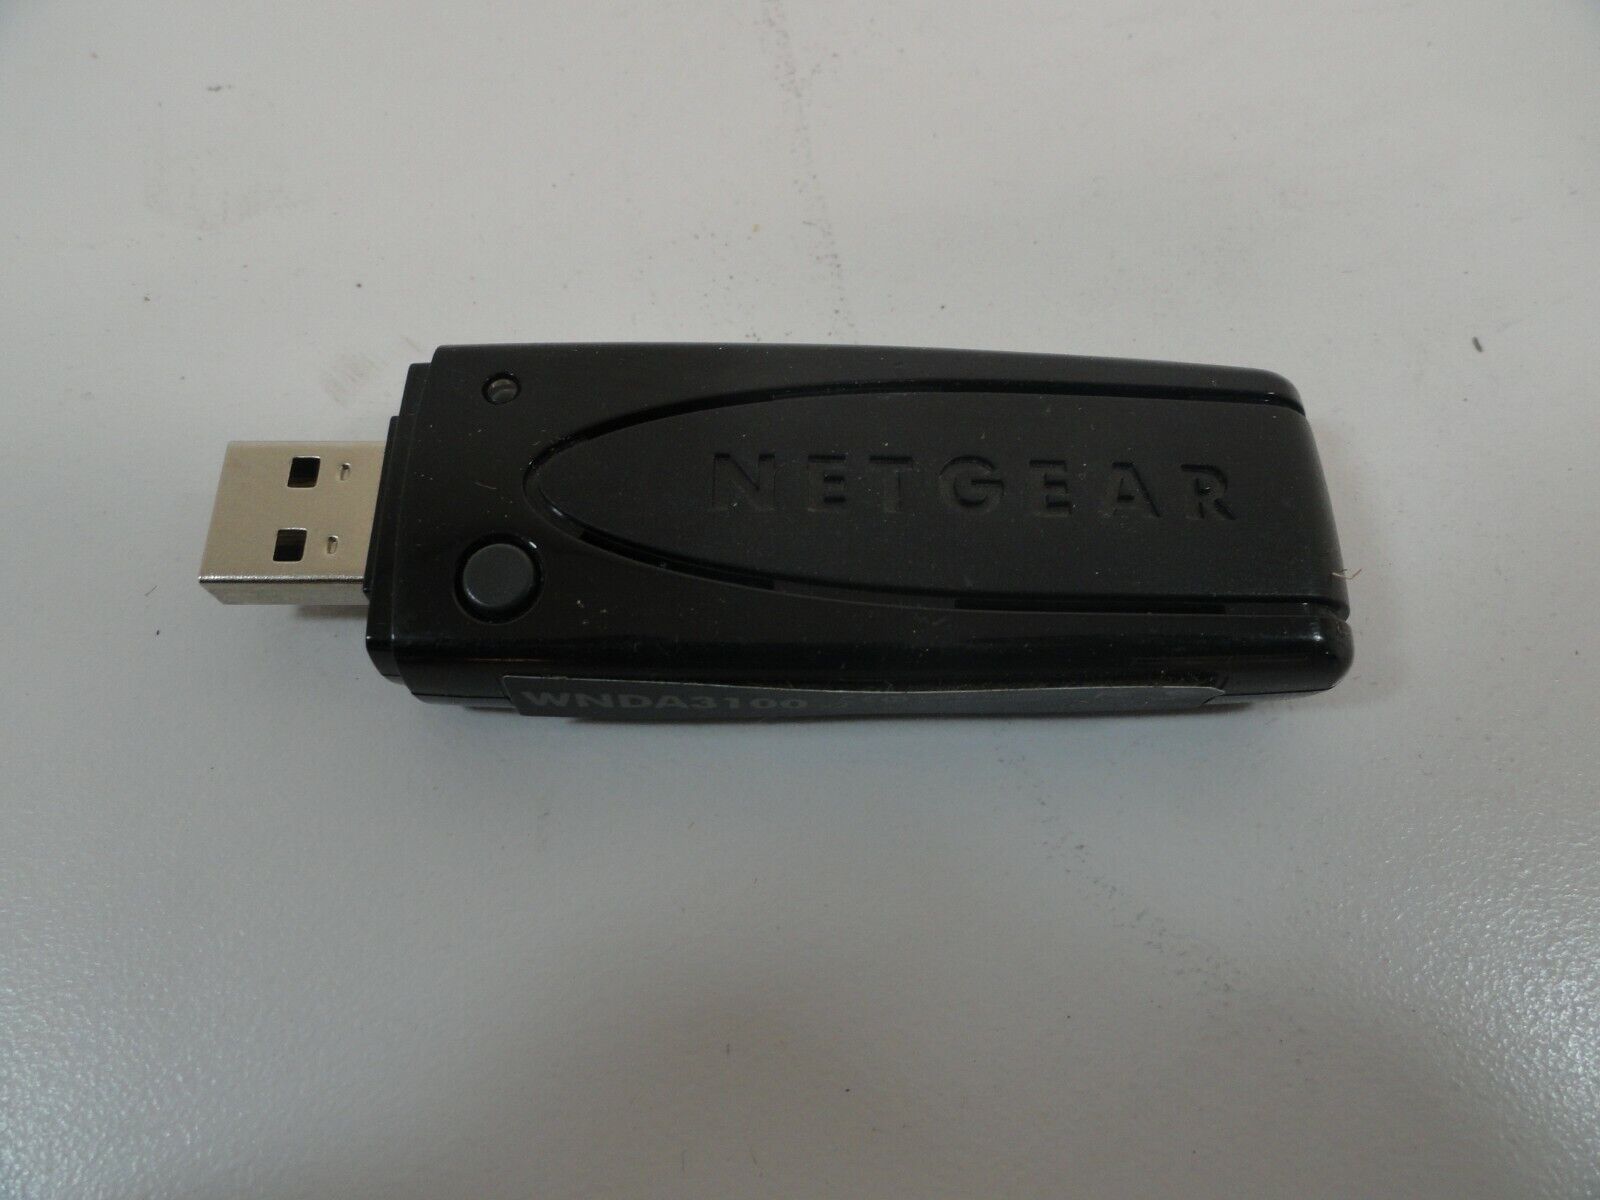 Netgear WNDA3100v2 USB Wireless-N Dual Band Wi-Fi Adapter(3E2.AU)